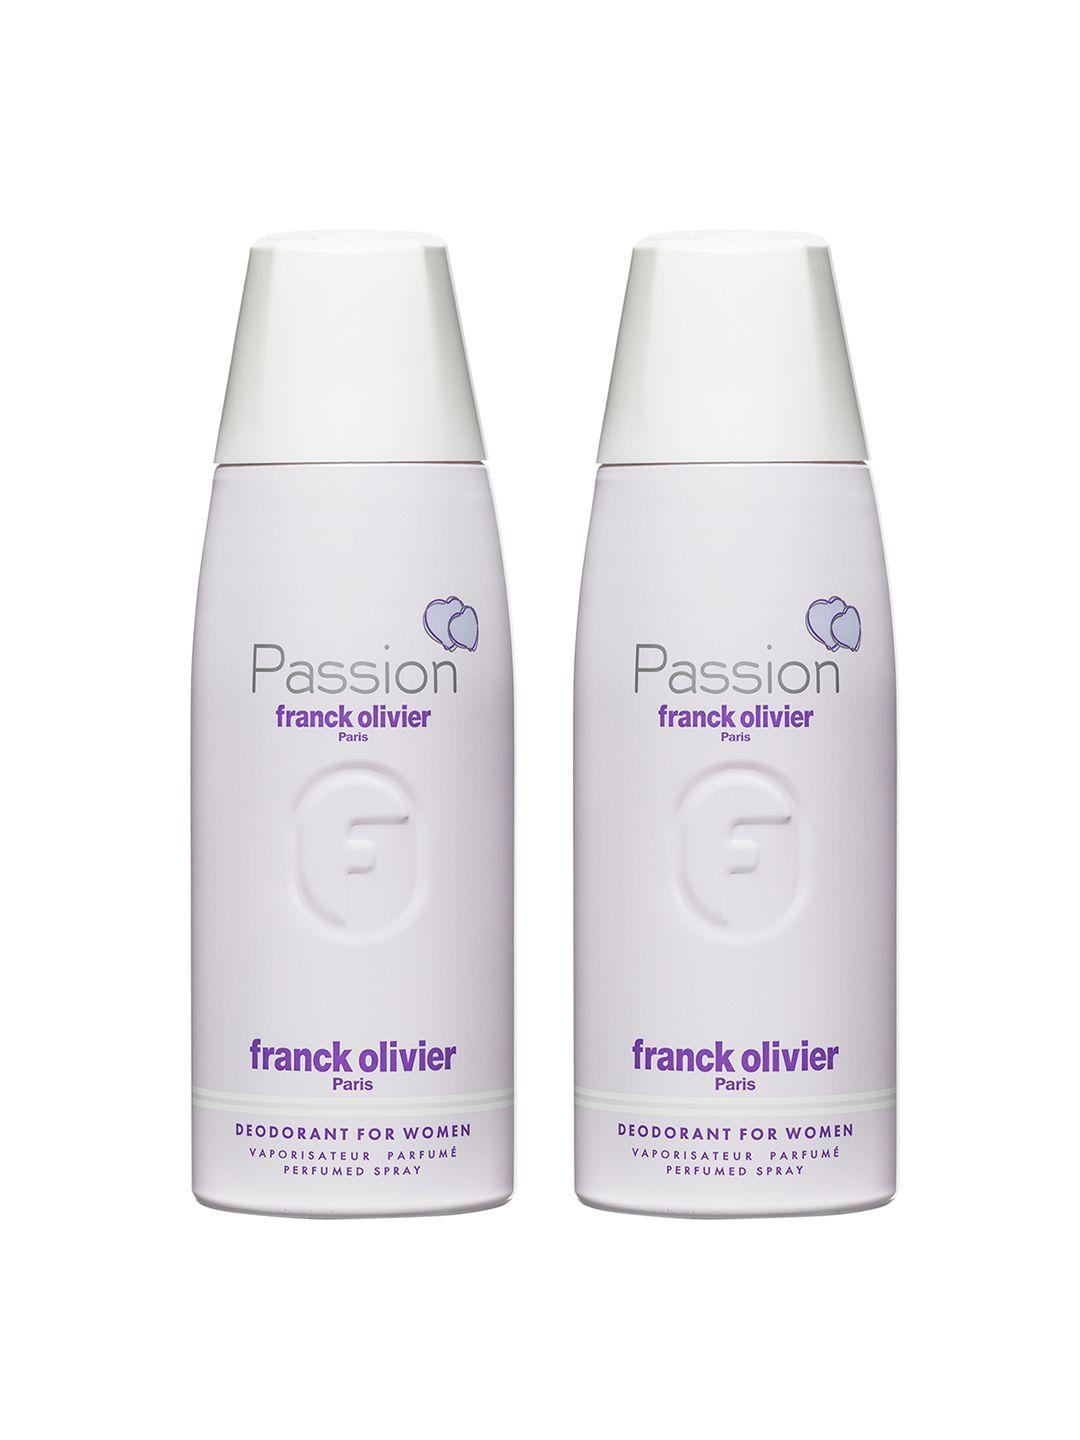 franck olivier women set of 2 passion odour control deodorant spray - 250 ml each